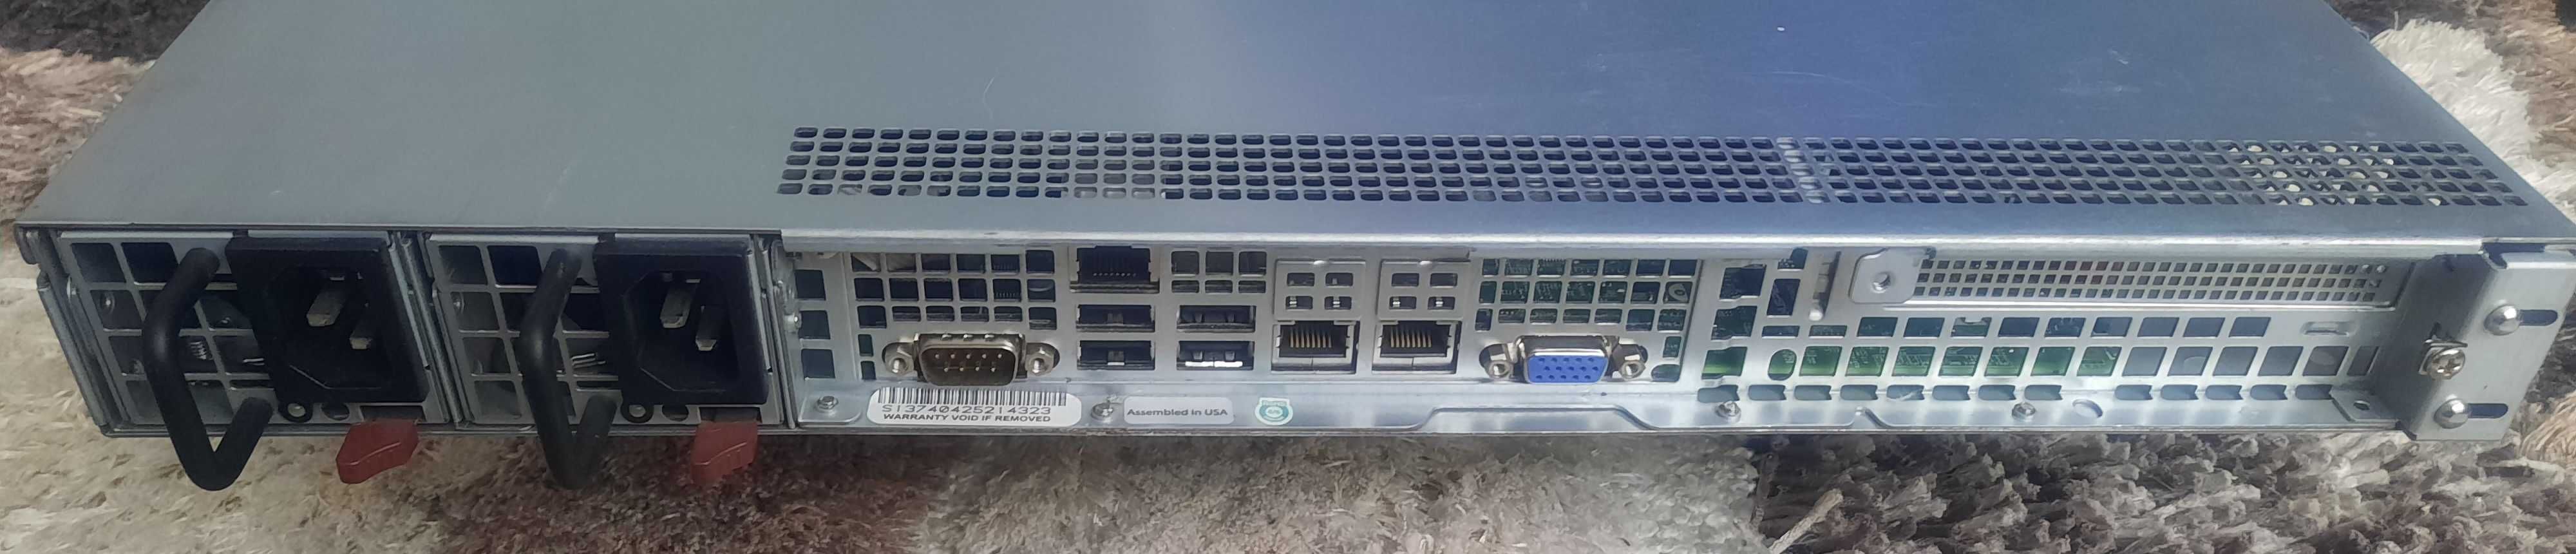 Продам сервер Supermicro XEON E3-1230v3 3.30GHz/16Gb/4TB